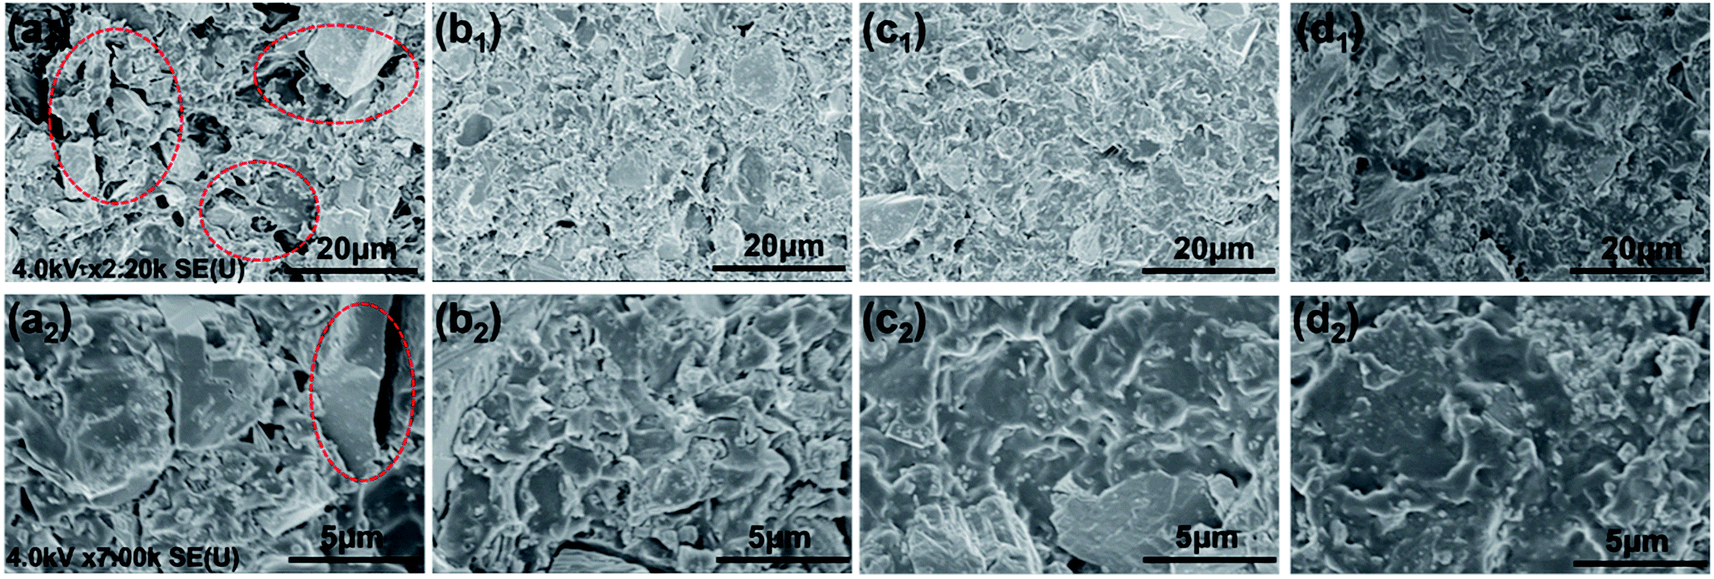 Anticorrosive behavior of a zinc-rich epoxy coating containing sulfonated  polyaniline in 3.5% NaCl solution - RSC Advances (RSC Publishing)  DOI:10.1039/C8RA00845K